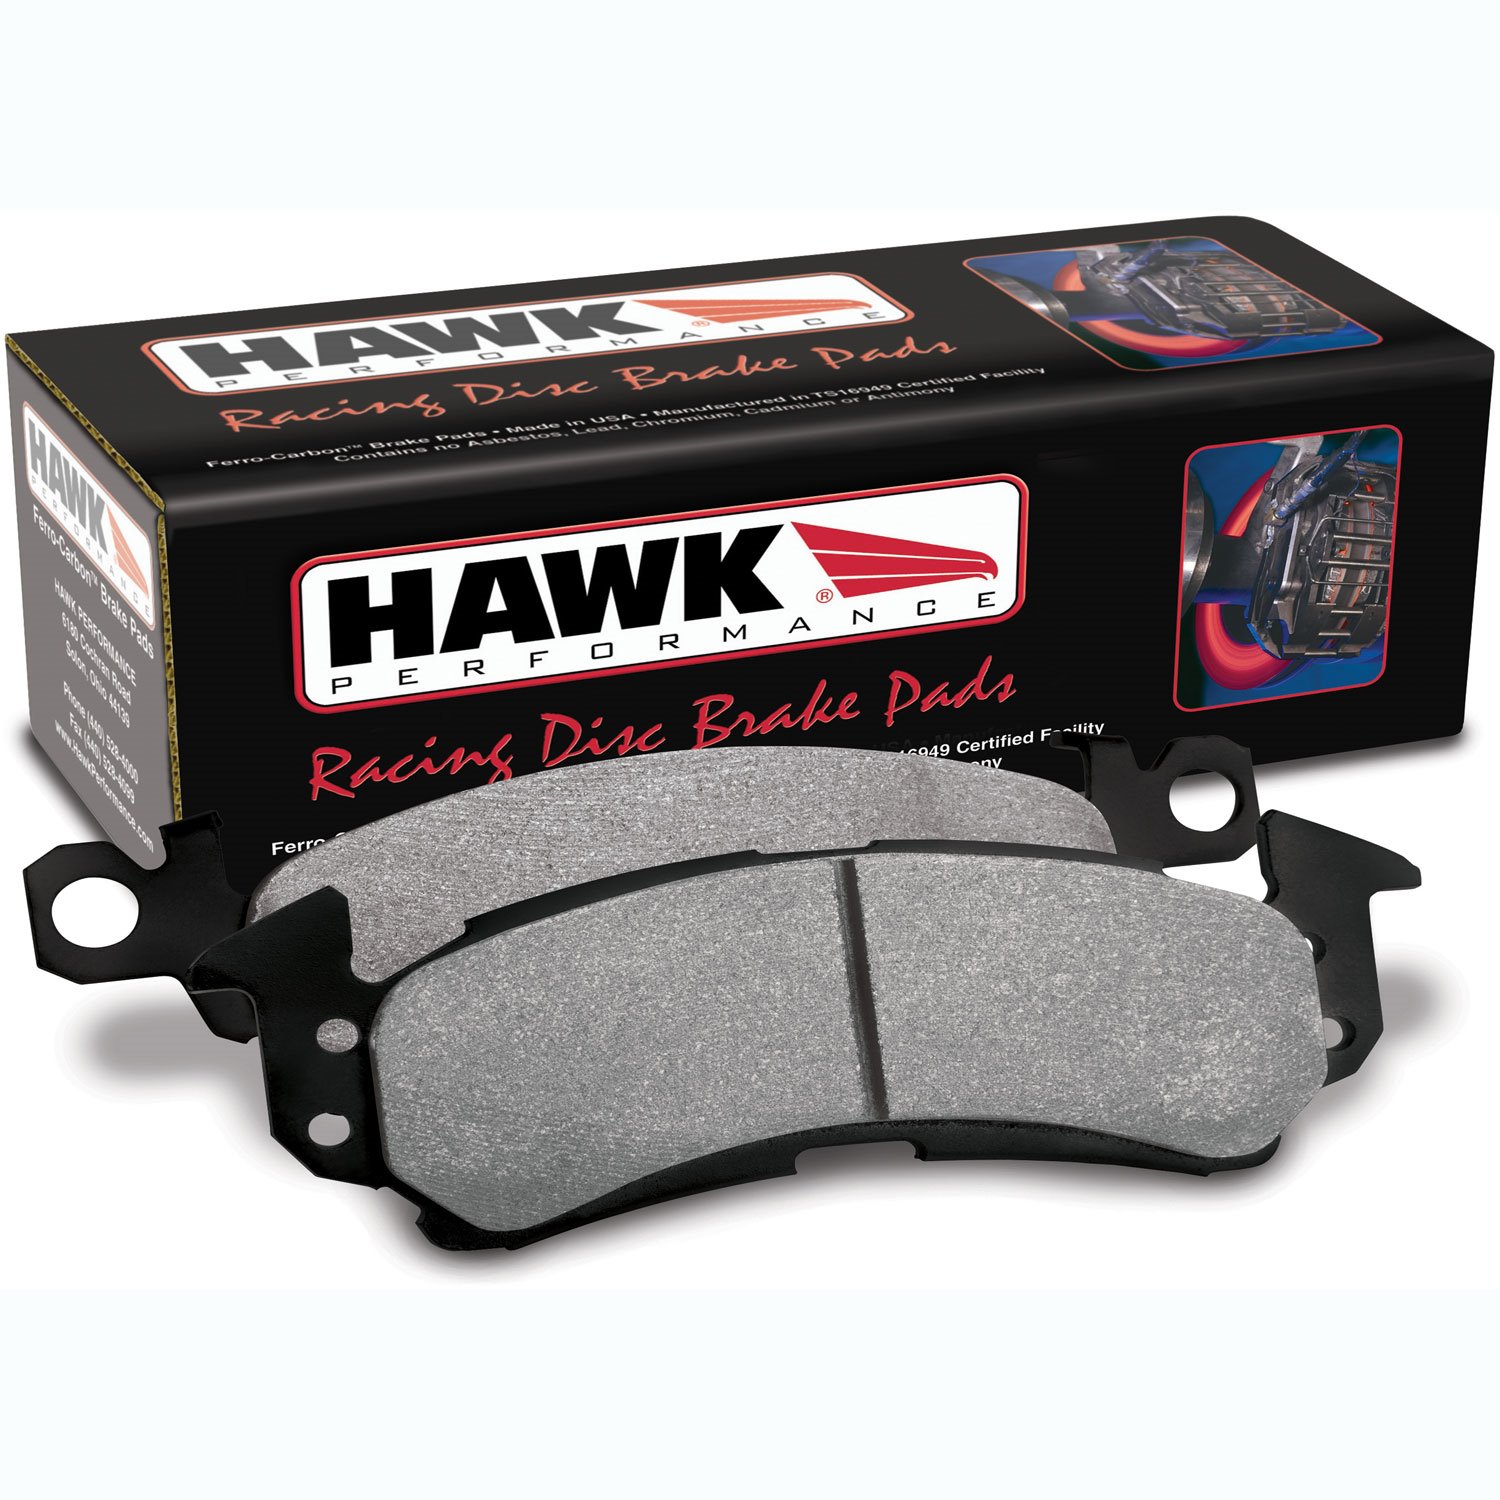 Disc Brake Pad HT-10 w/0.490 Thickness